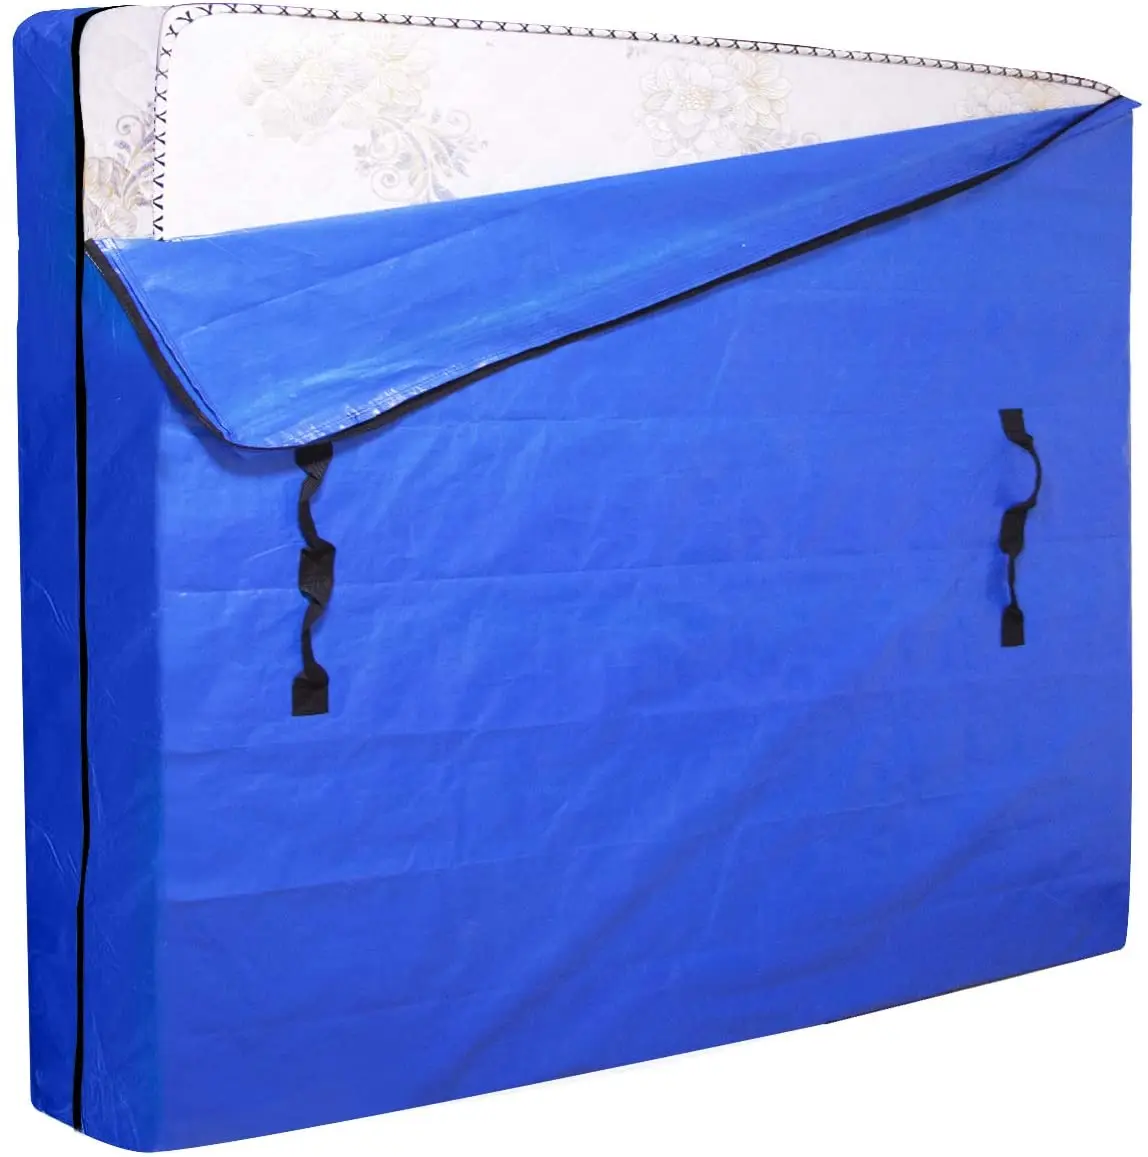 

Amazon Hot selling Waterproof Mattress Bag with 8 Handles Moving and Mattress Storage Bag Reusable Cover Mattress Bag, Customizable